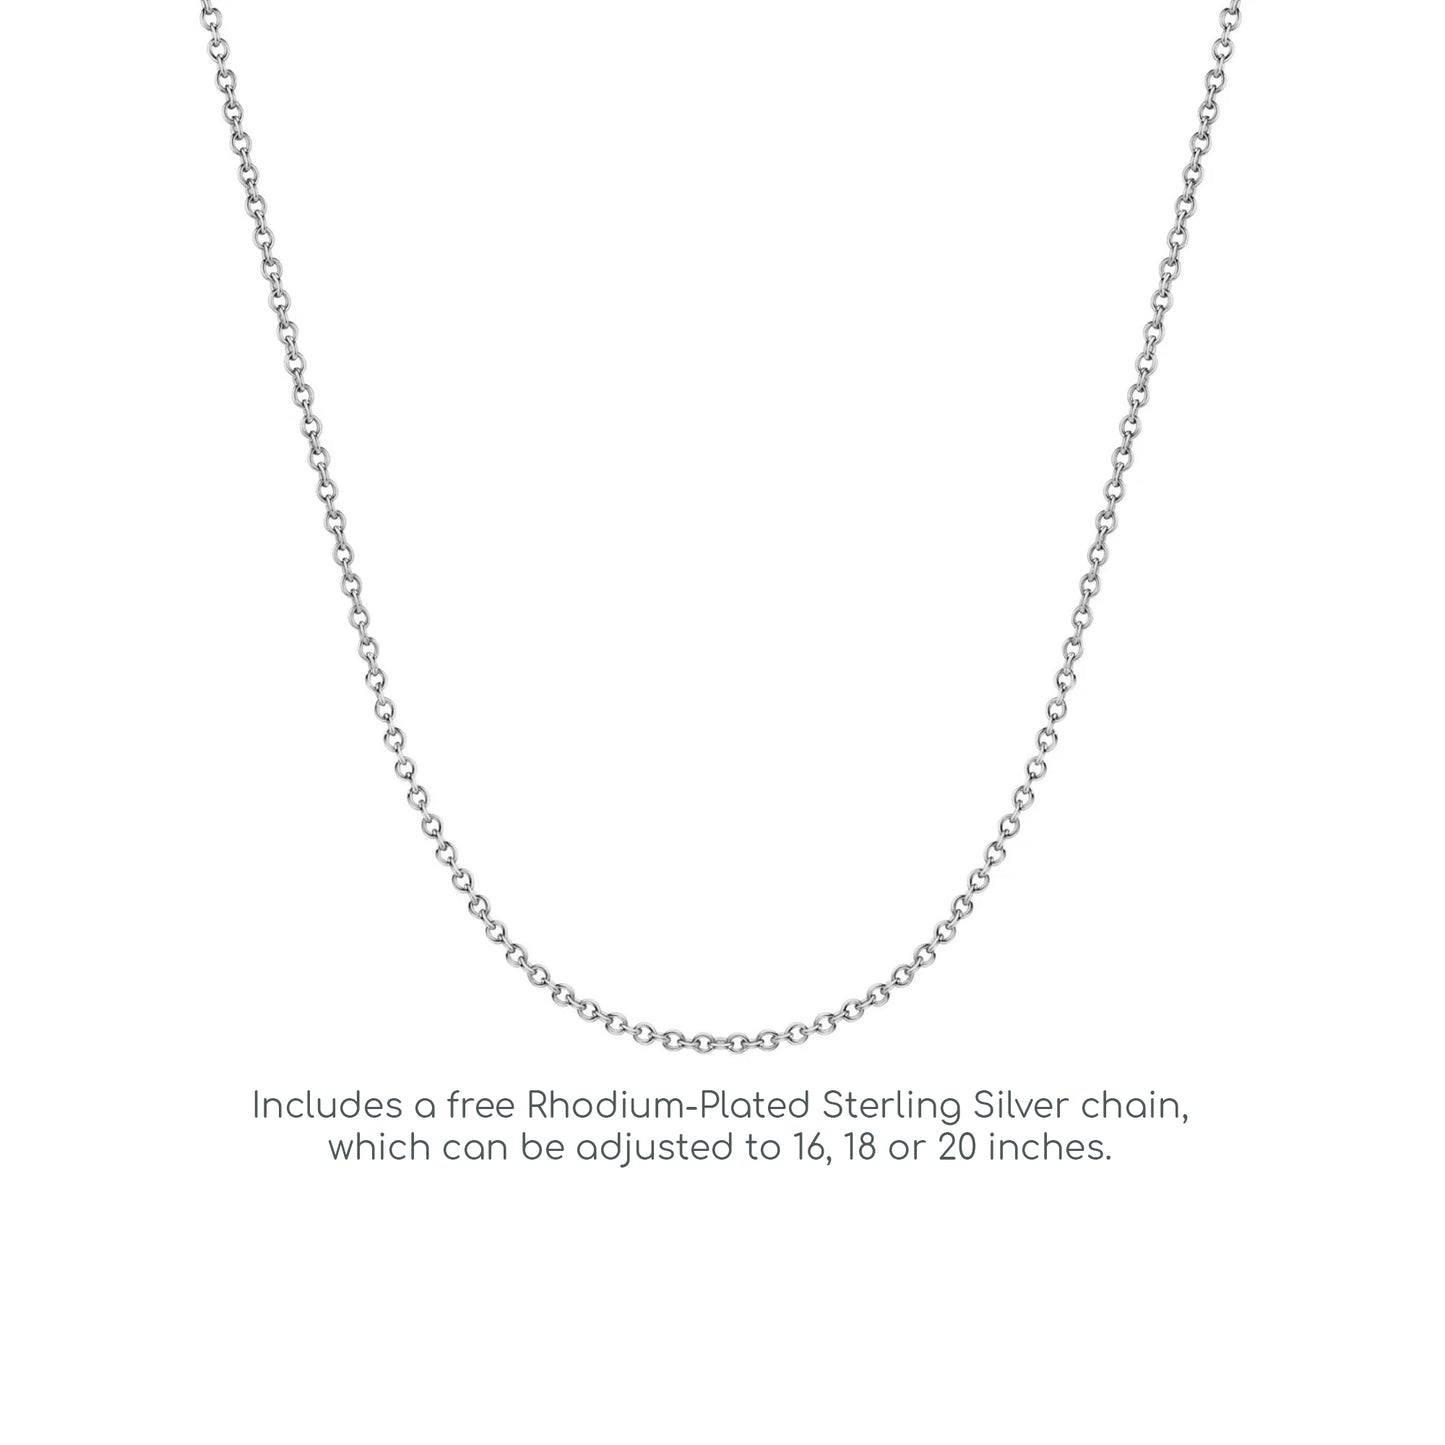 Silver  Avocado Handbag Pendant Necklace - GVP594